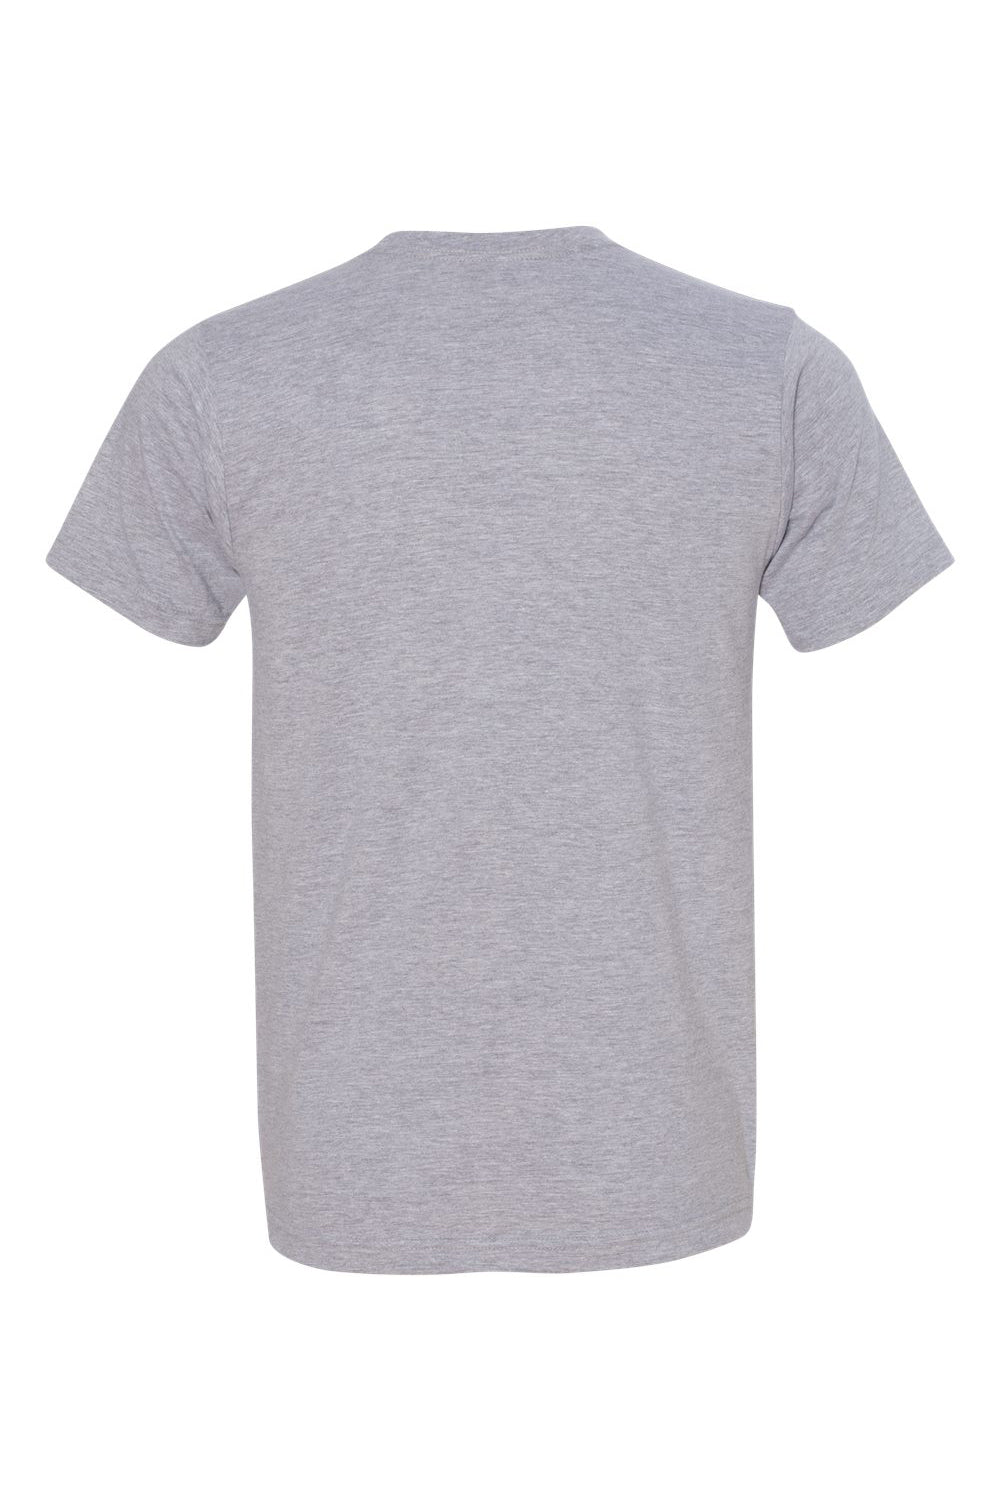 Bayside 5010 Mens USA Made Short Sleeve Crewneck T-Shirt Heather Grey Flat Back